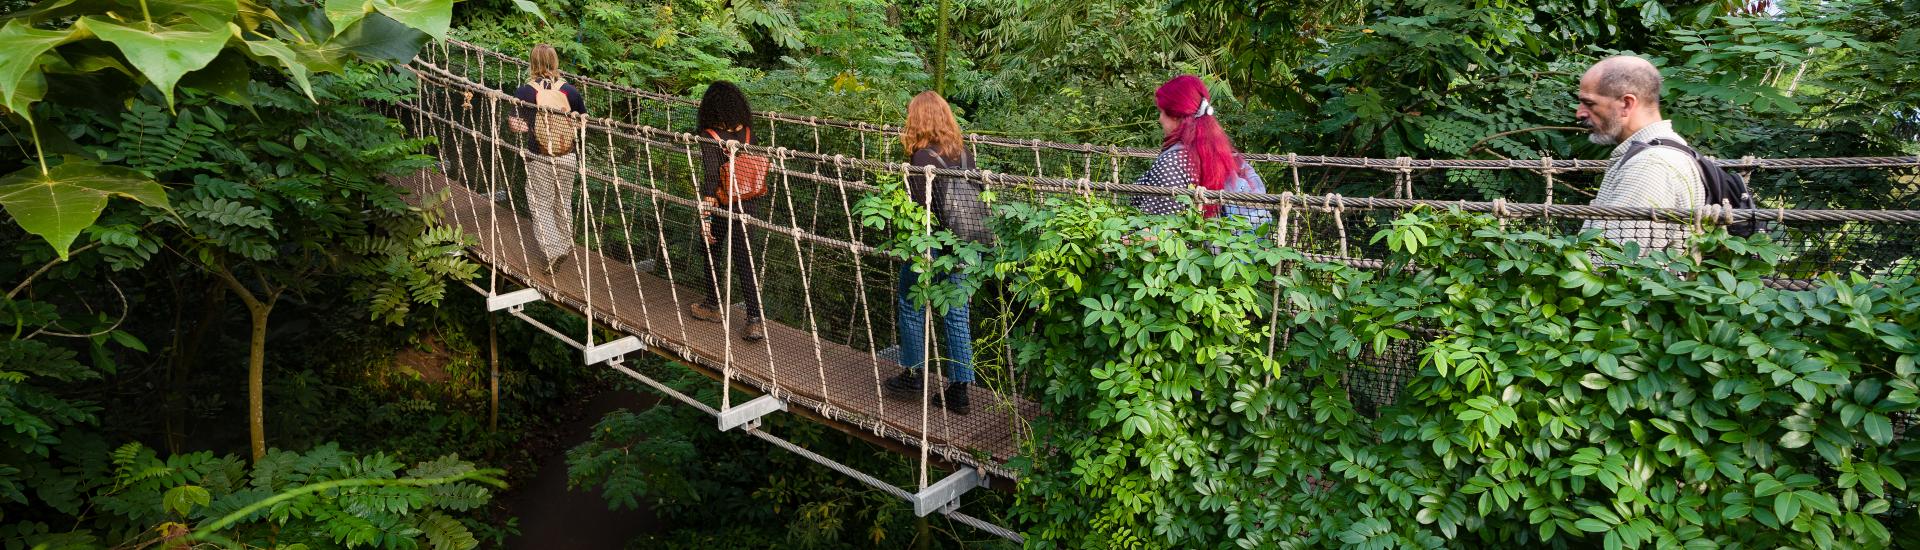 People walking across a wobbly bridge in the Eden Project Rainforest Biome